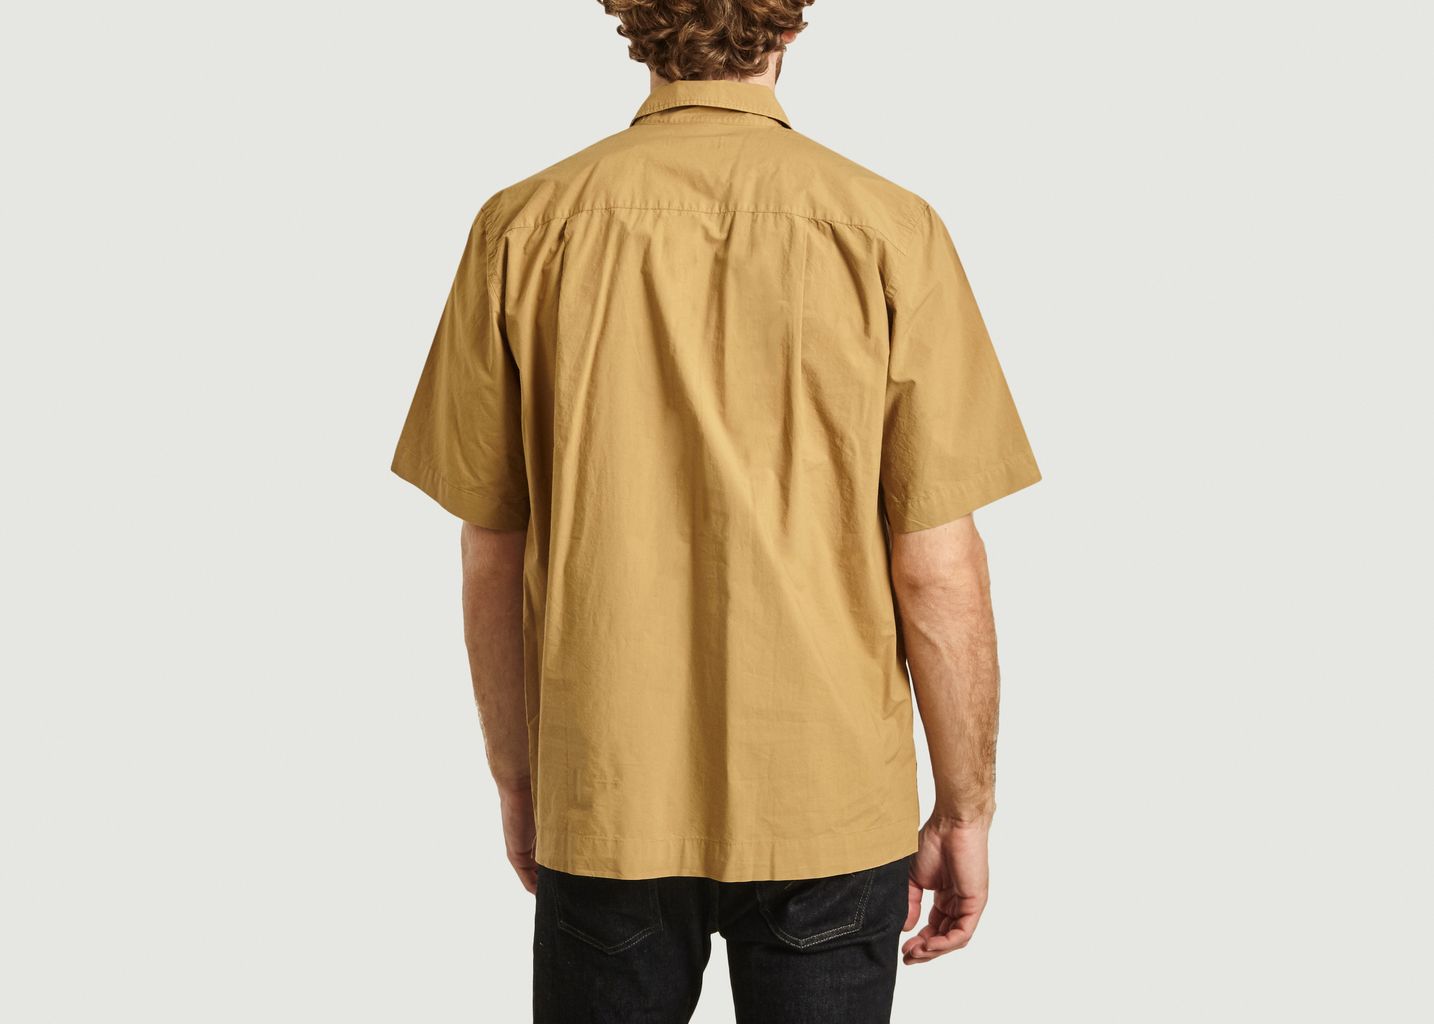 Gante shirt - Loreak Mendian